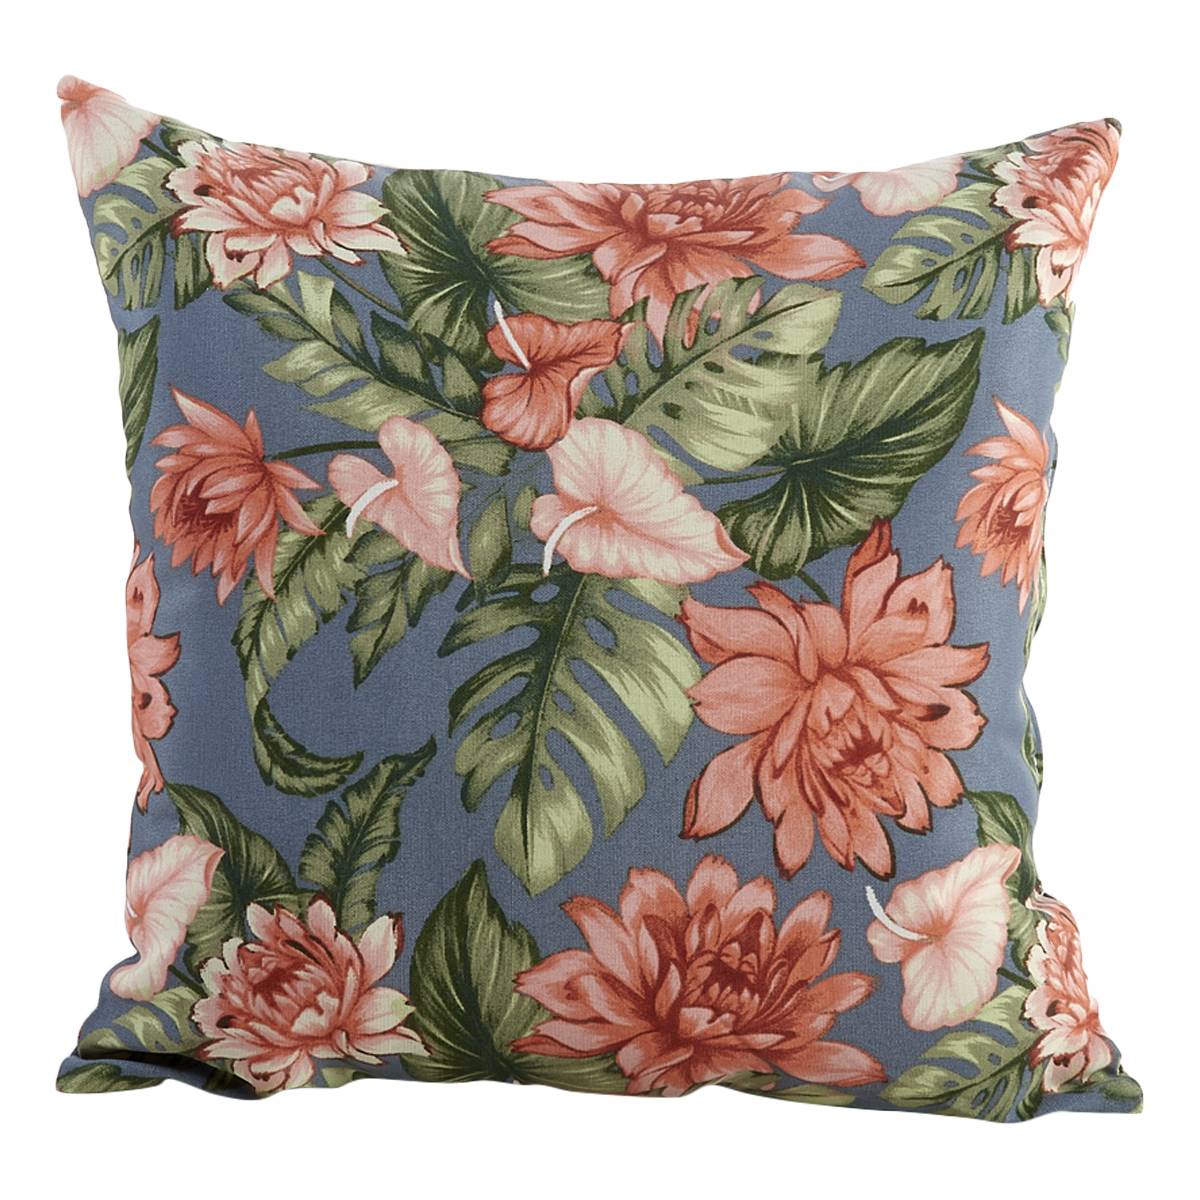 Jordan Manufacturing Outdoor Toss Pillow - Slate Coral Floral